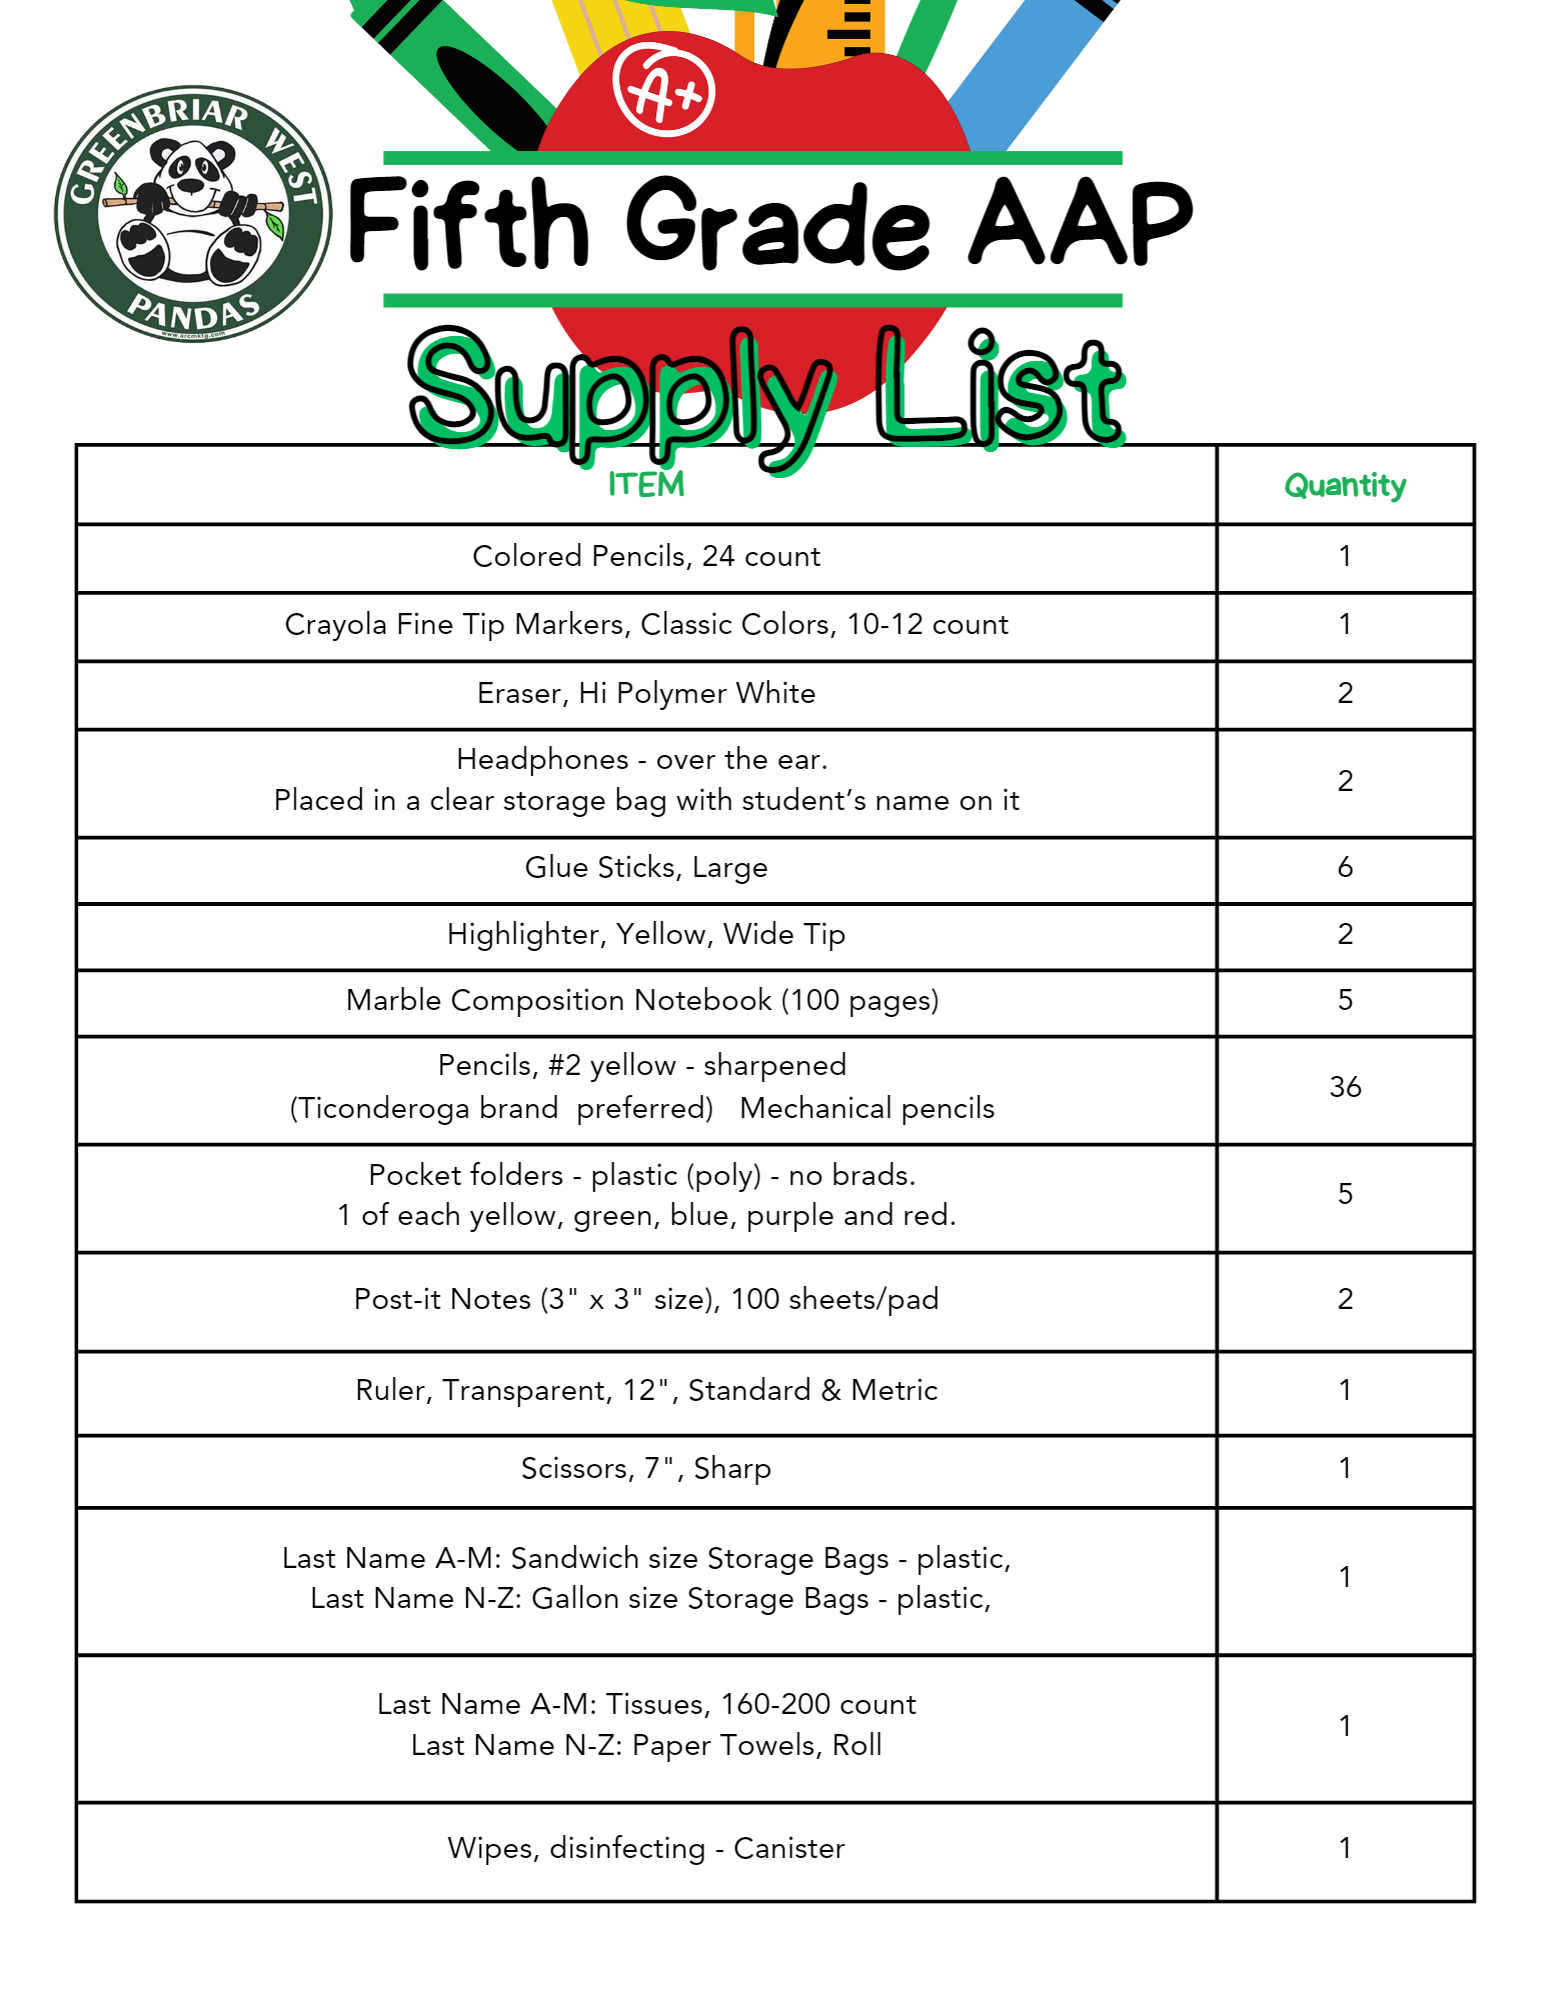 Fifth Grade AAP Supply List 